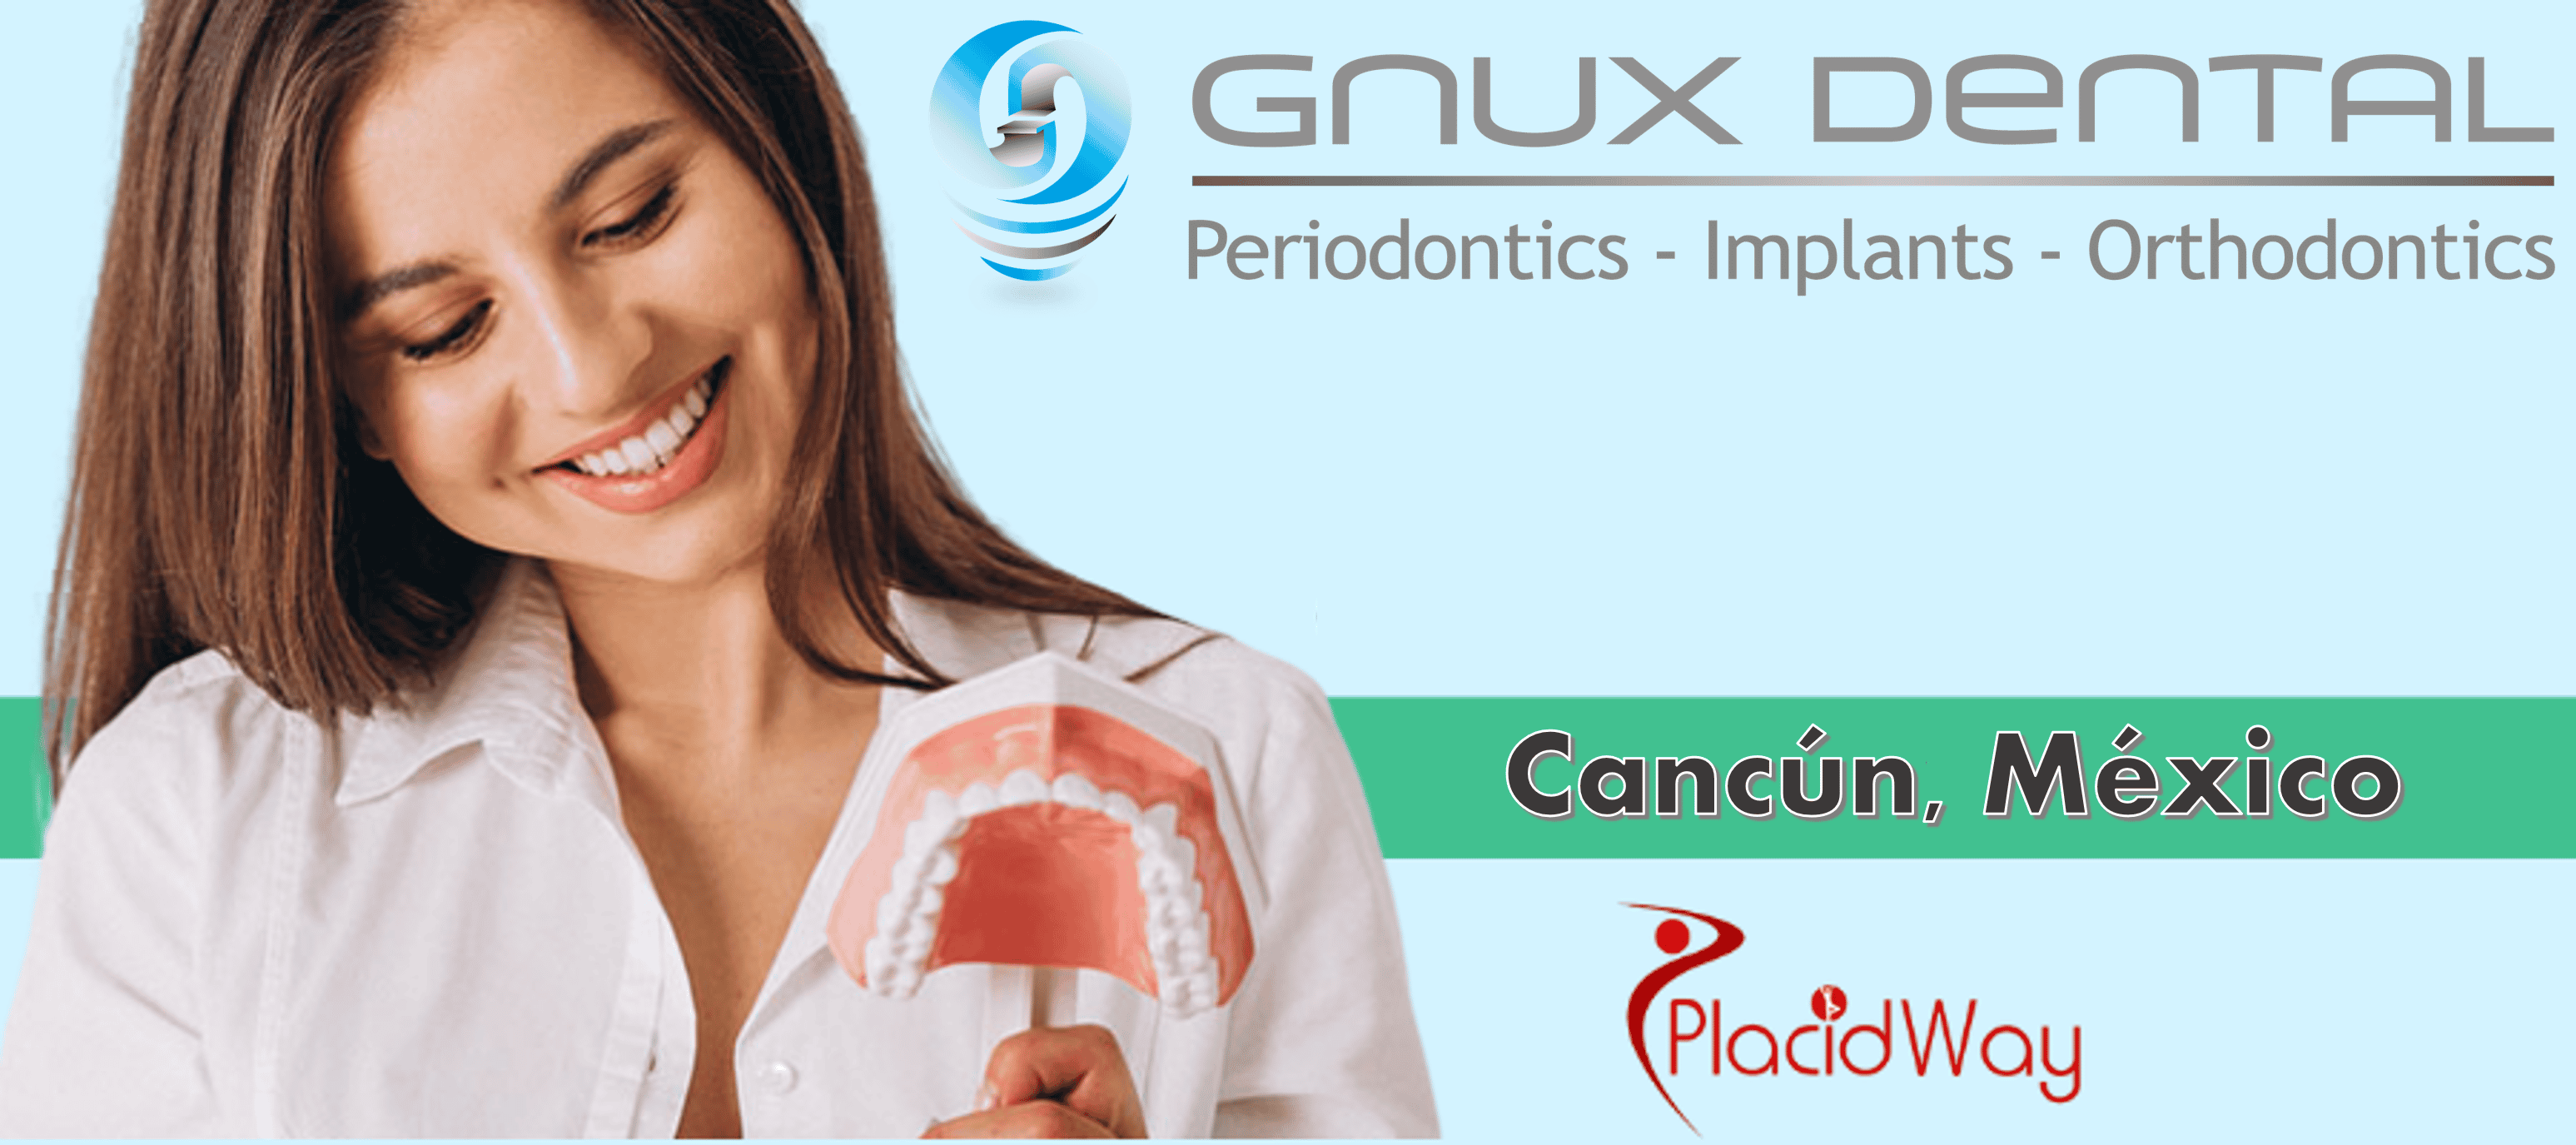 Top Dental Services in Cancún Mexico